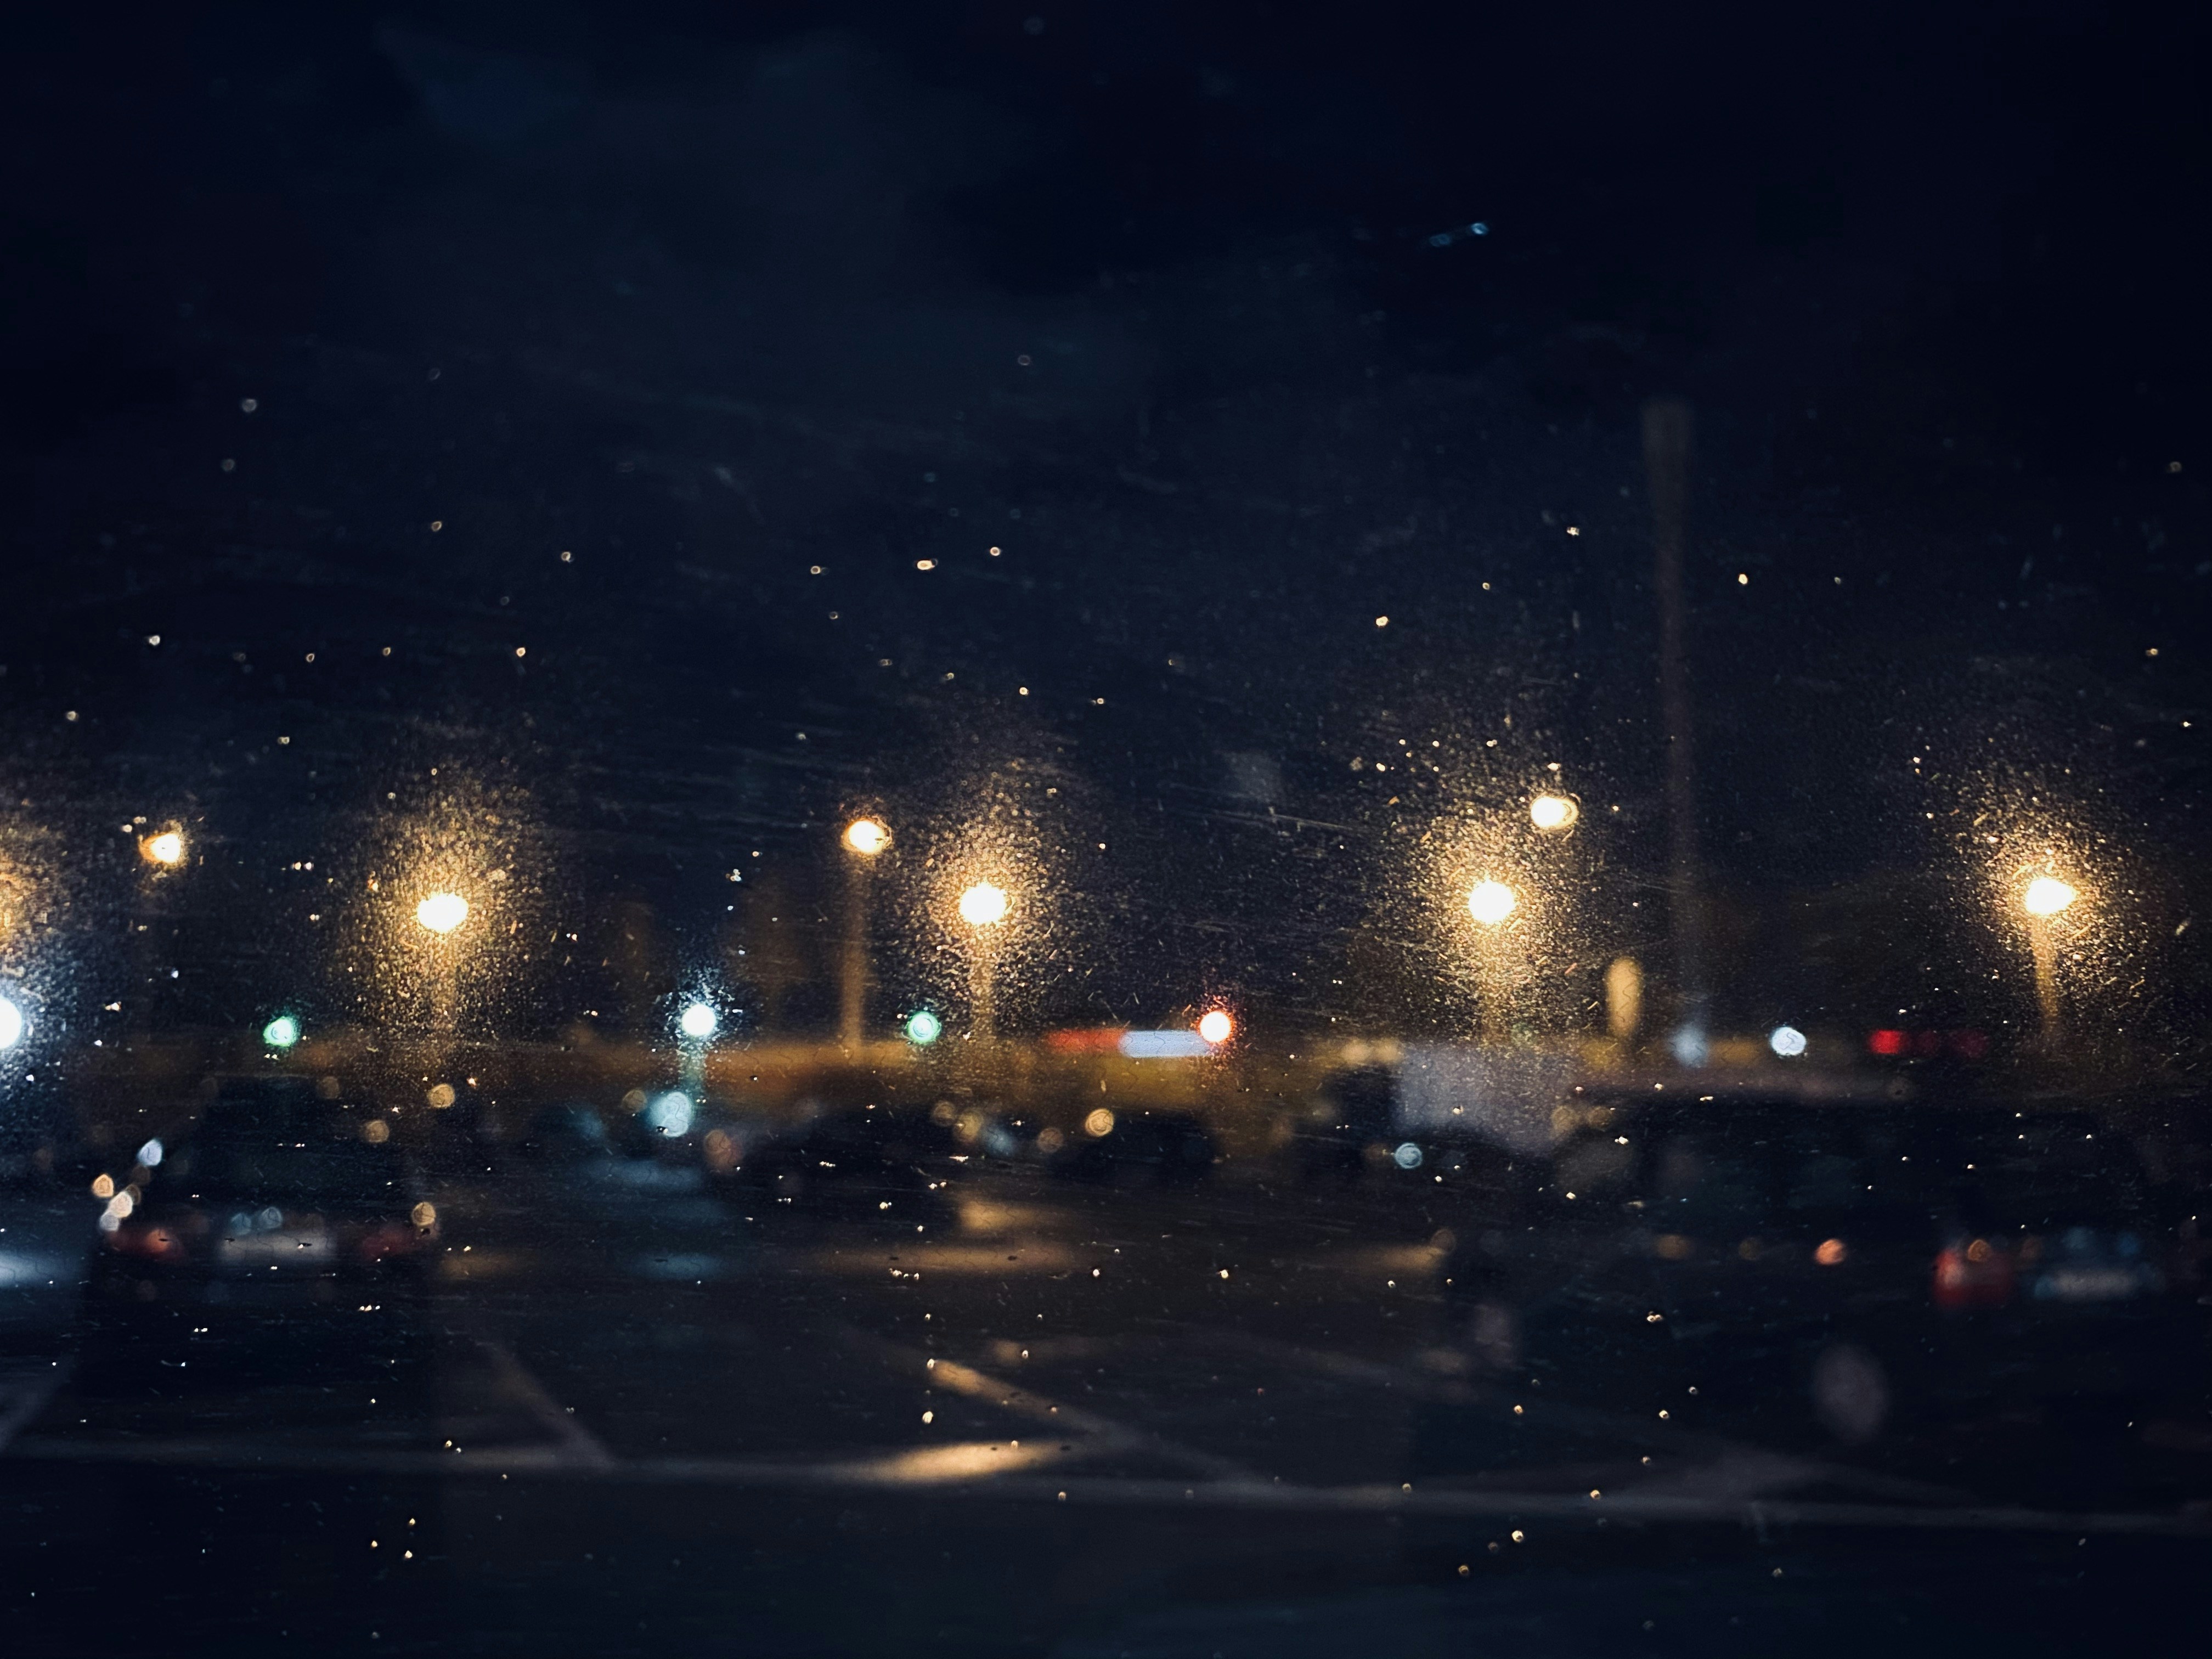 Night lights through a windshield